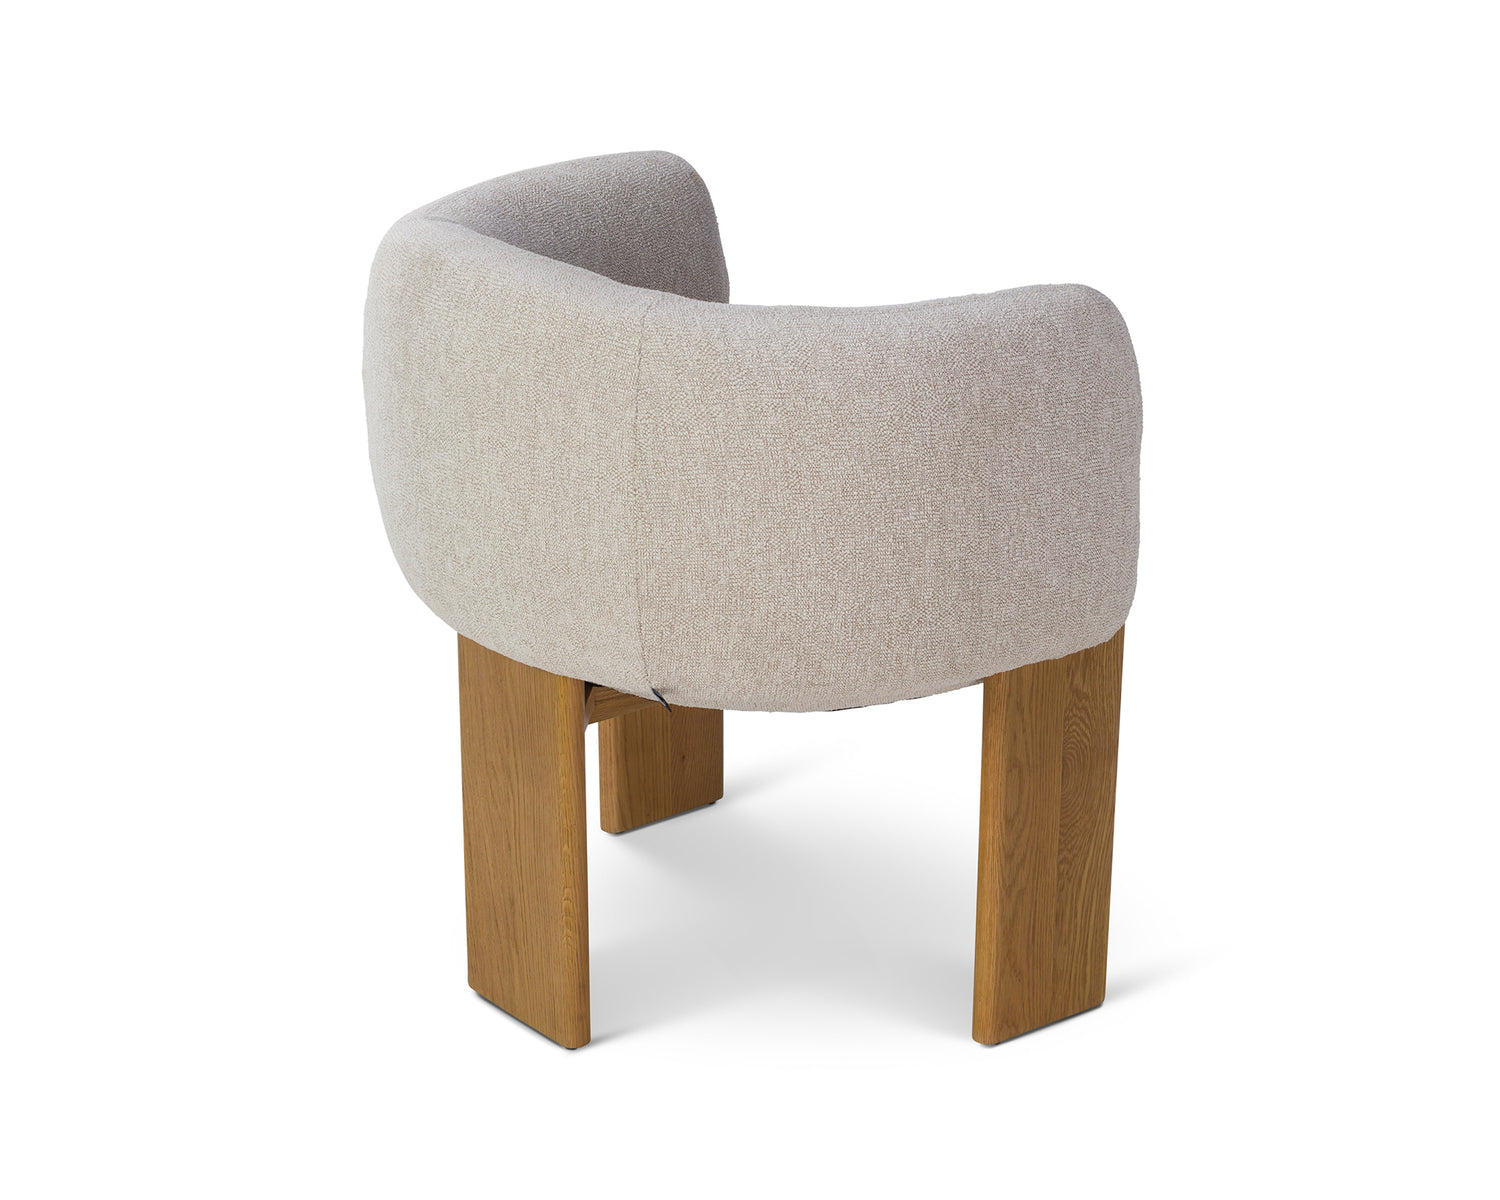 Lucca dining chair – bilma sand &amp; dry honey oak